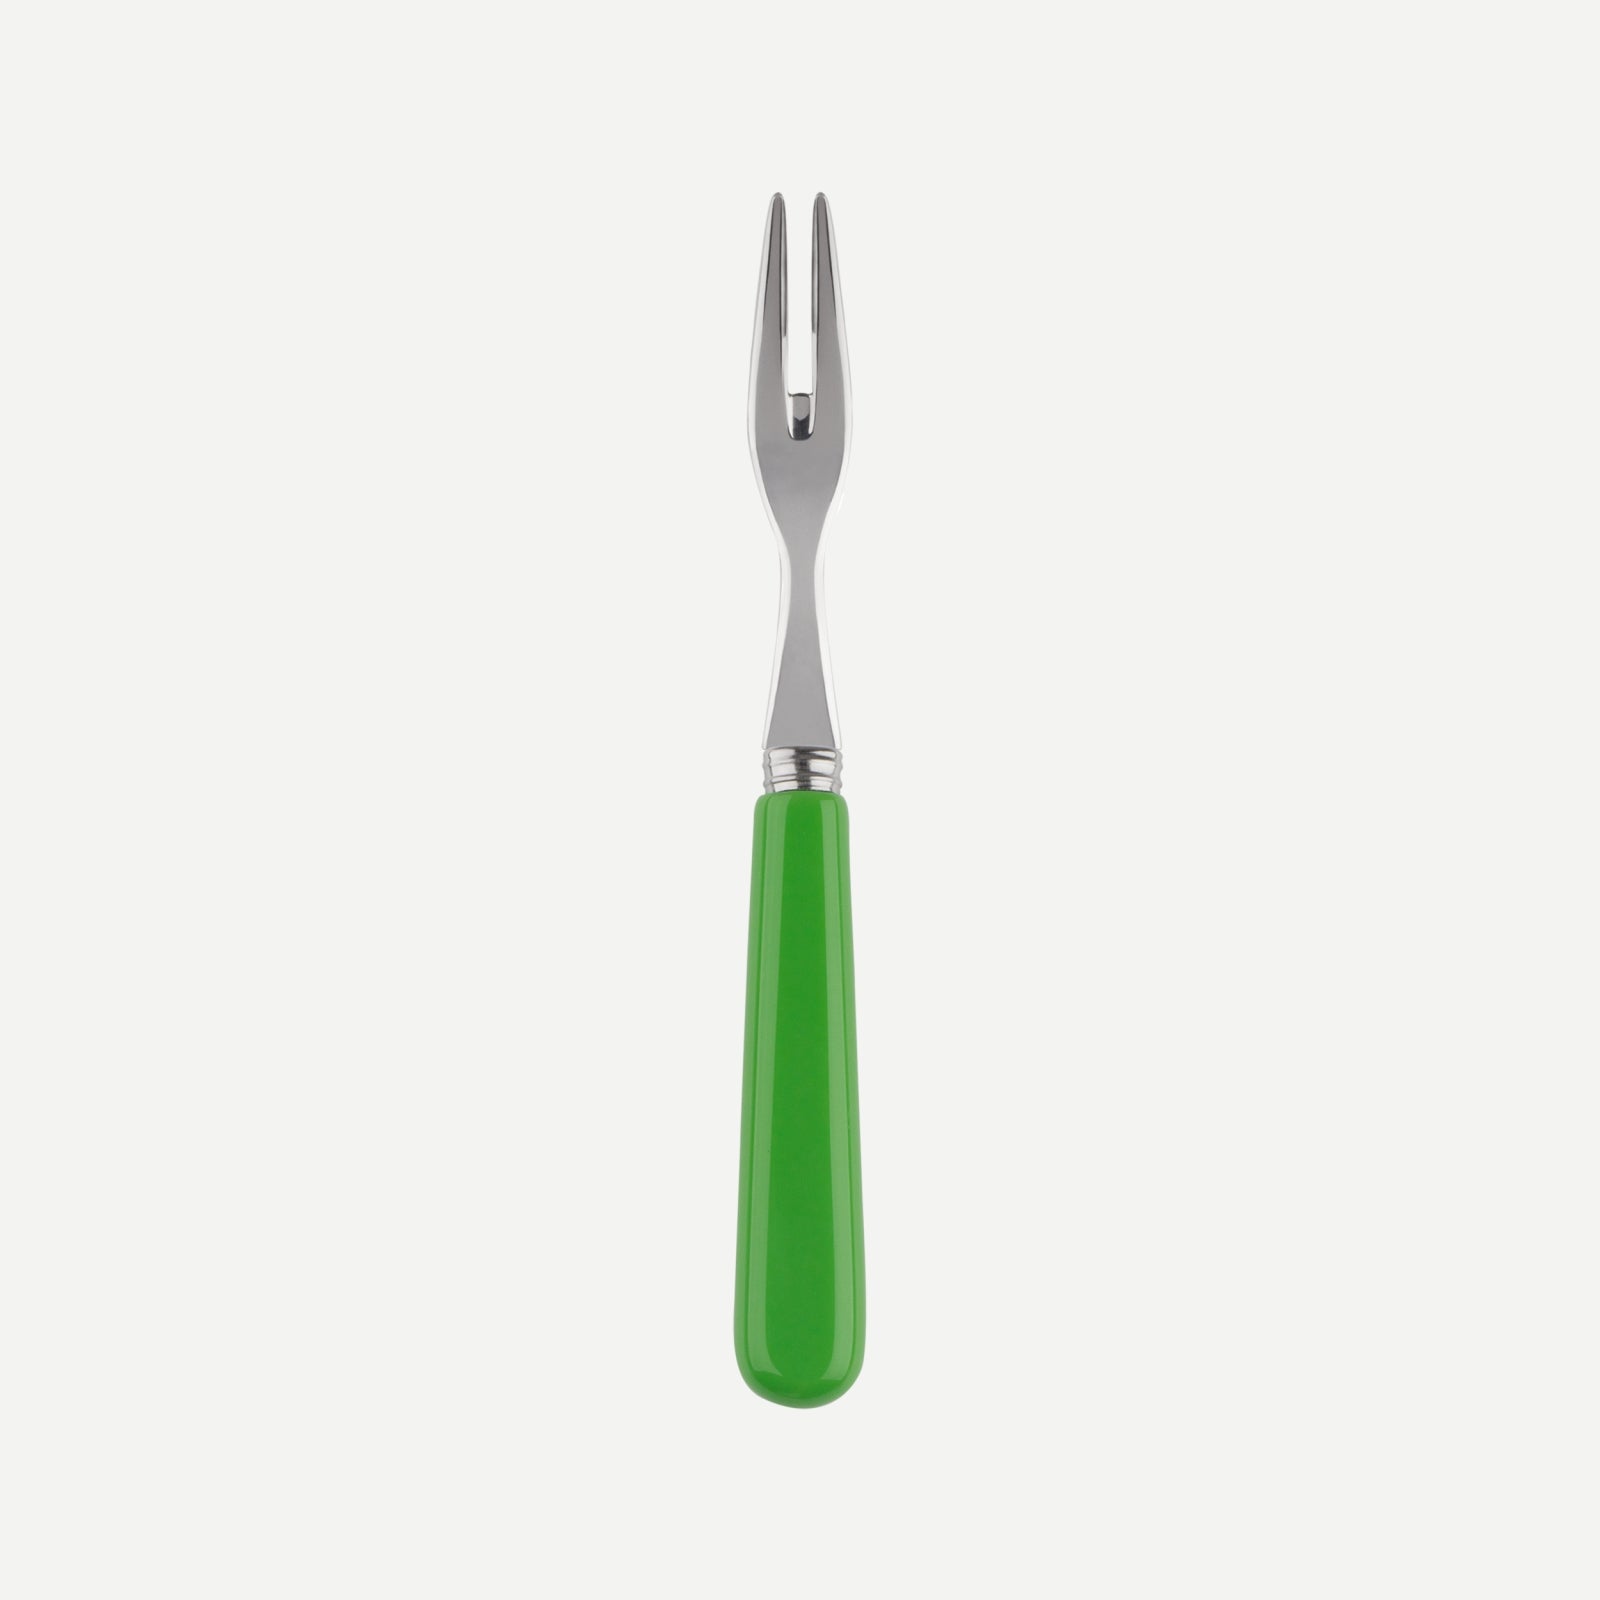 Cocktail fork - Pop unis - Streaming green